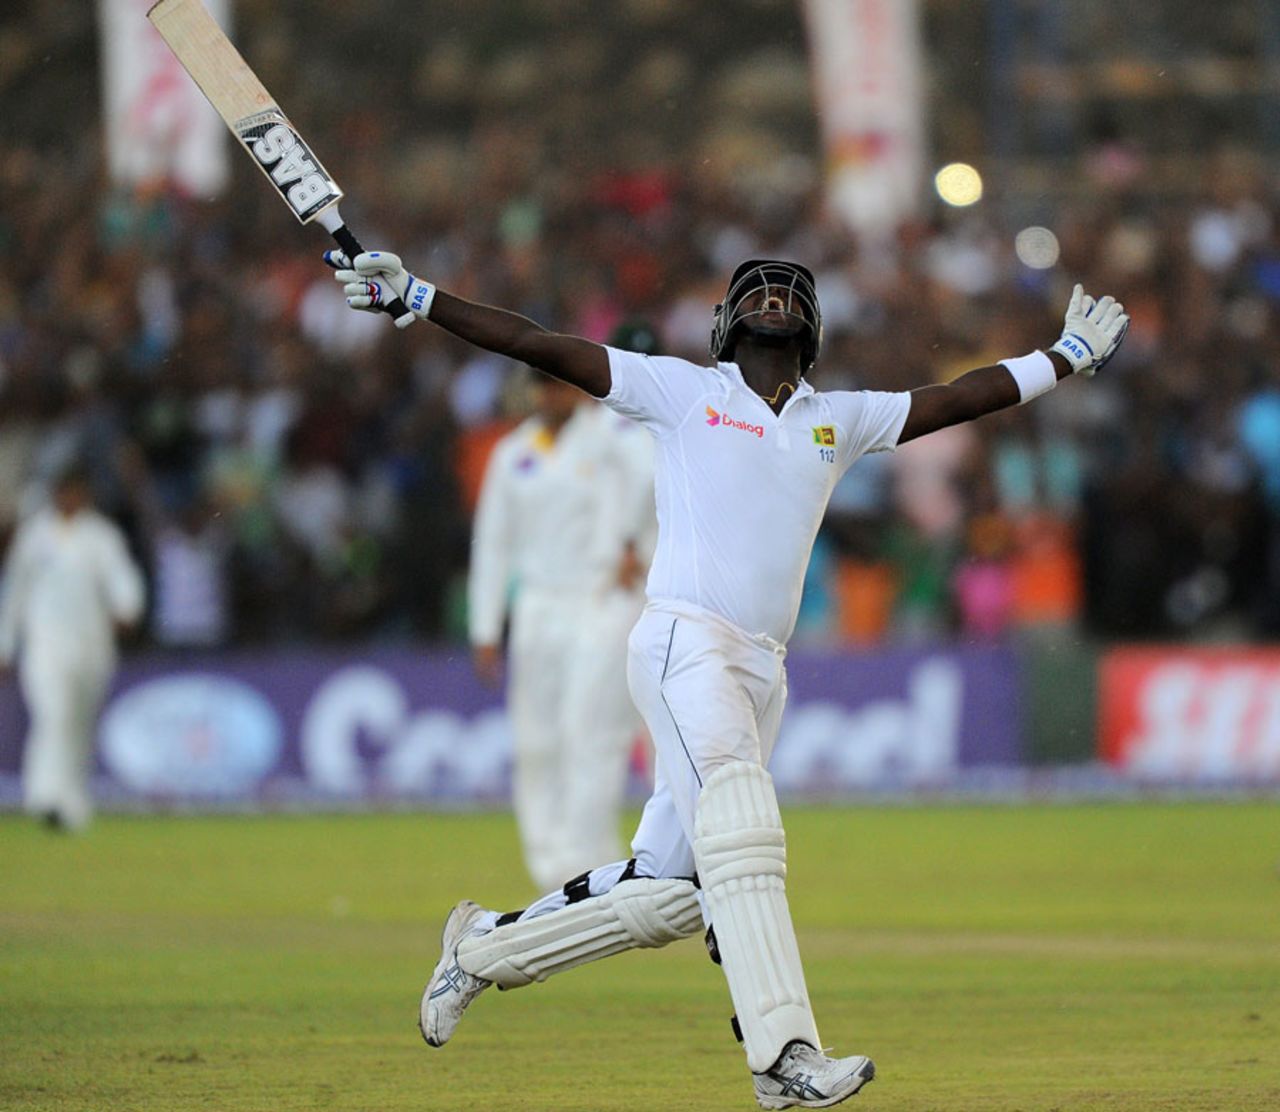 Angelo Mathews celebrates after hitting the winning runs, Sri Lanka v Pakistan, 1st Test, Galle, 5th day, August 10, 2014